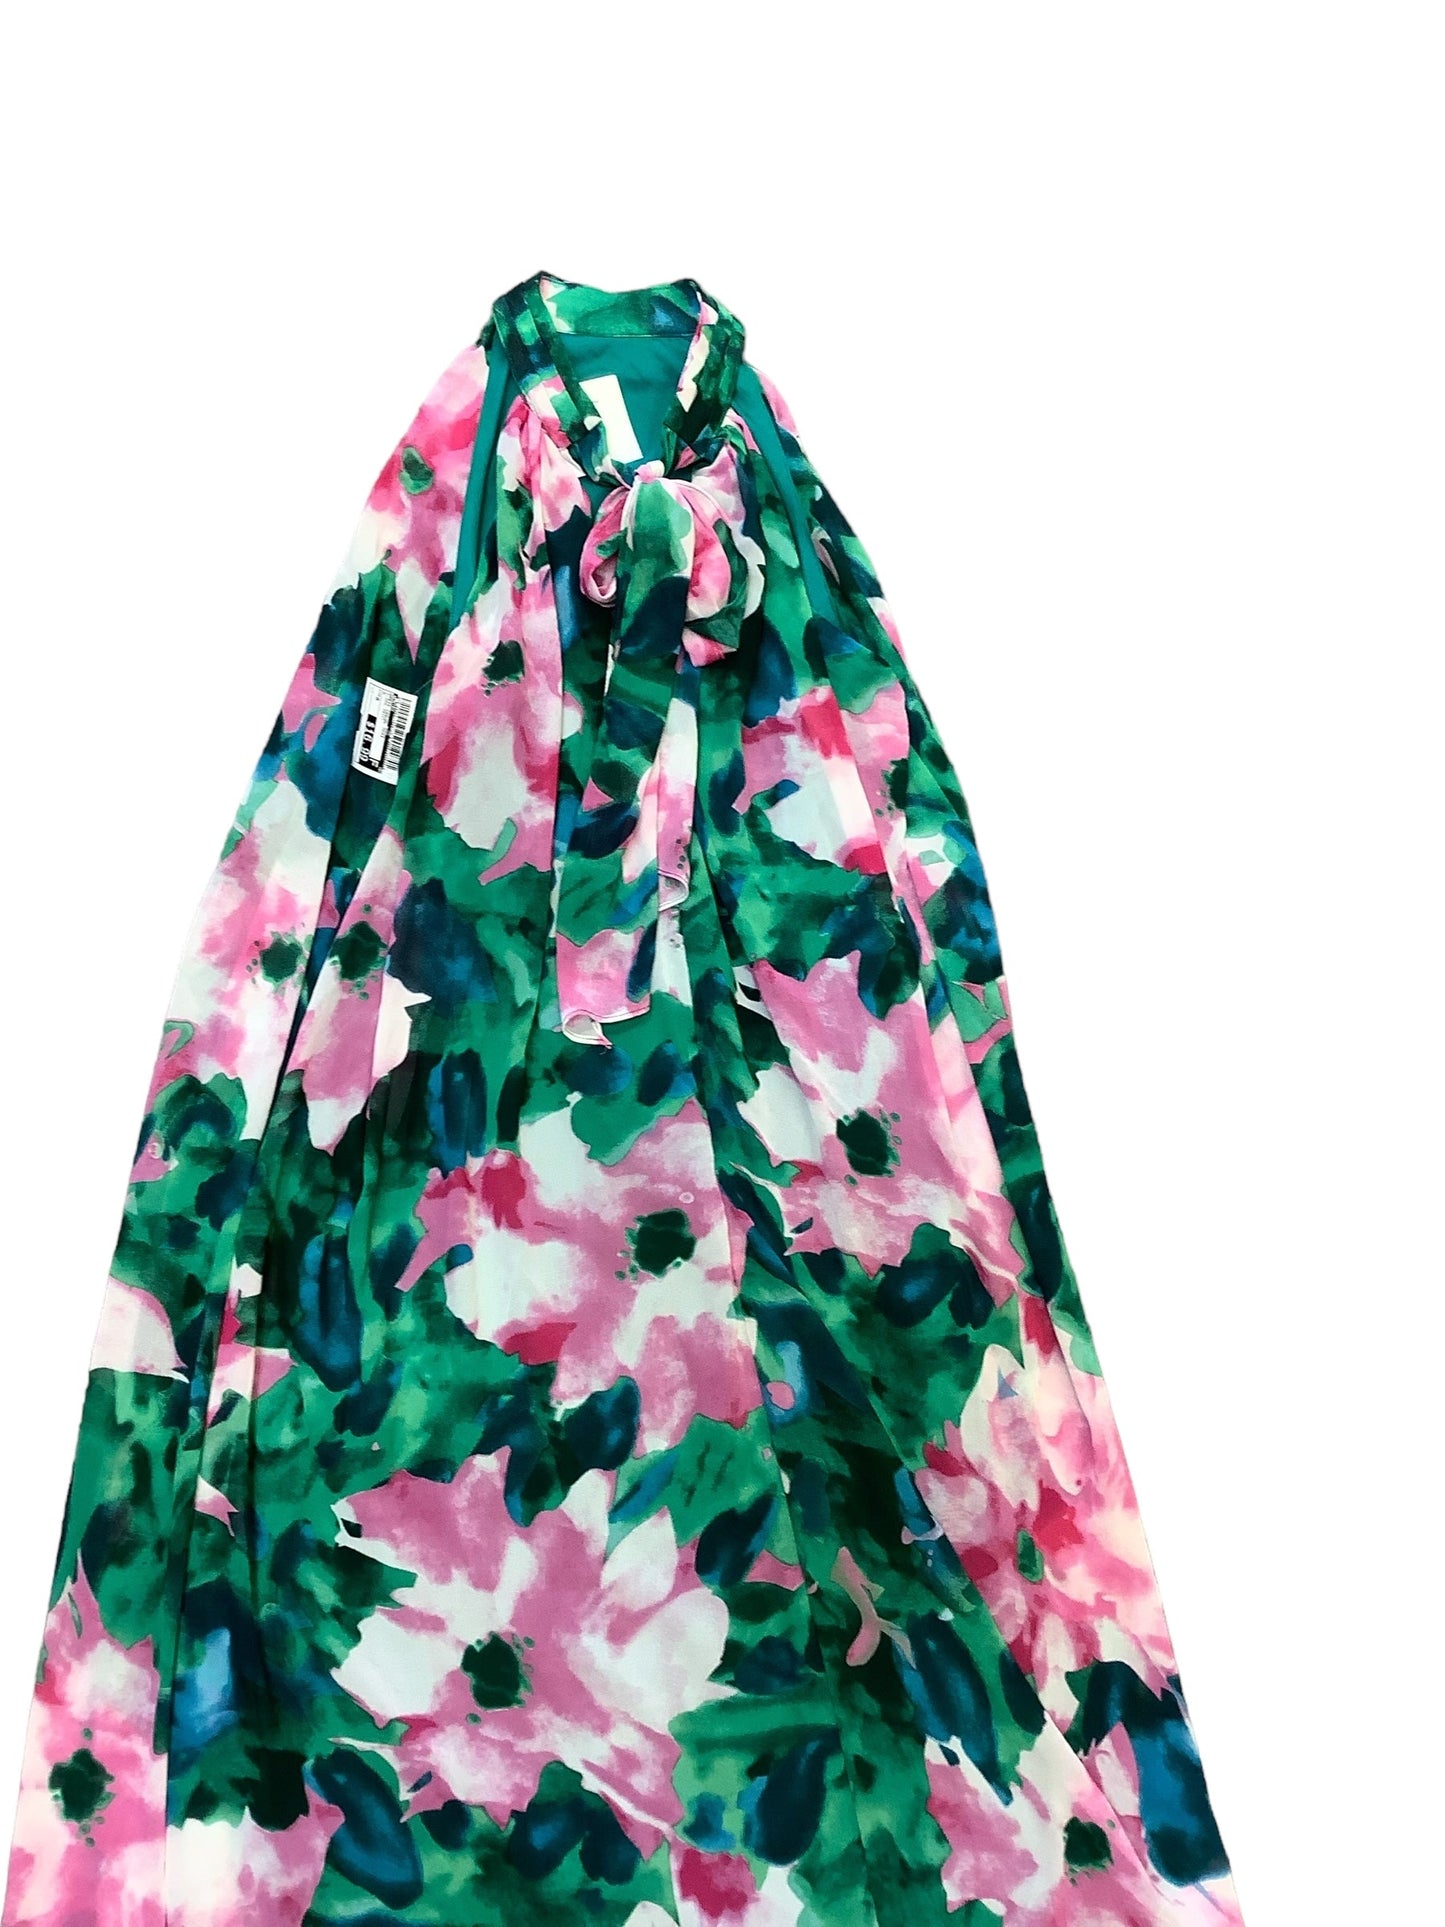 Floral Print Dress Casual Maxi Entro, Size M